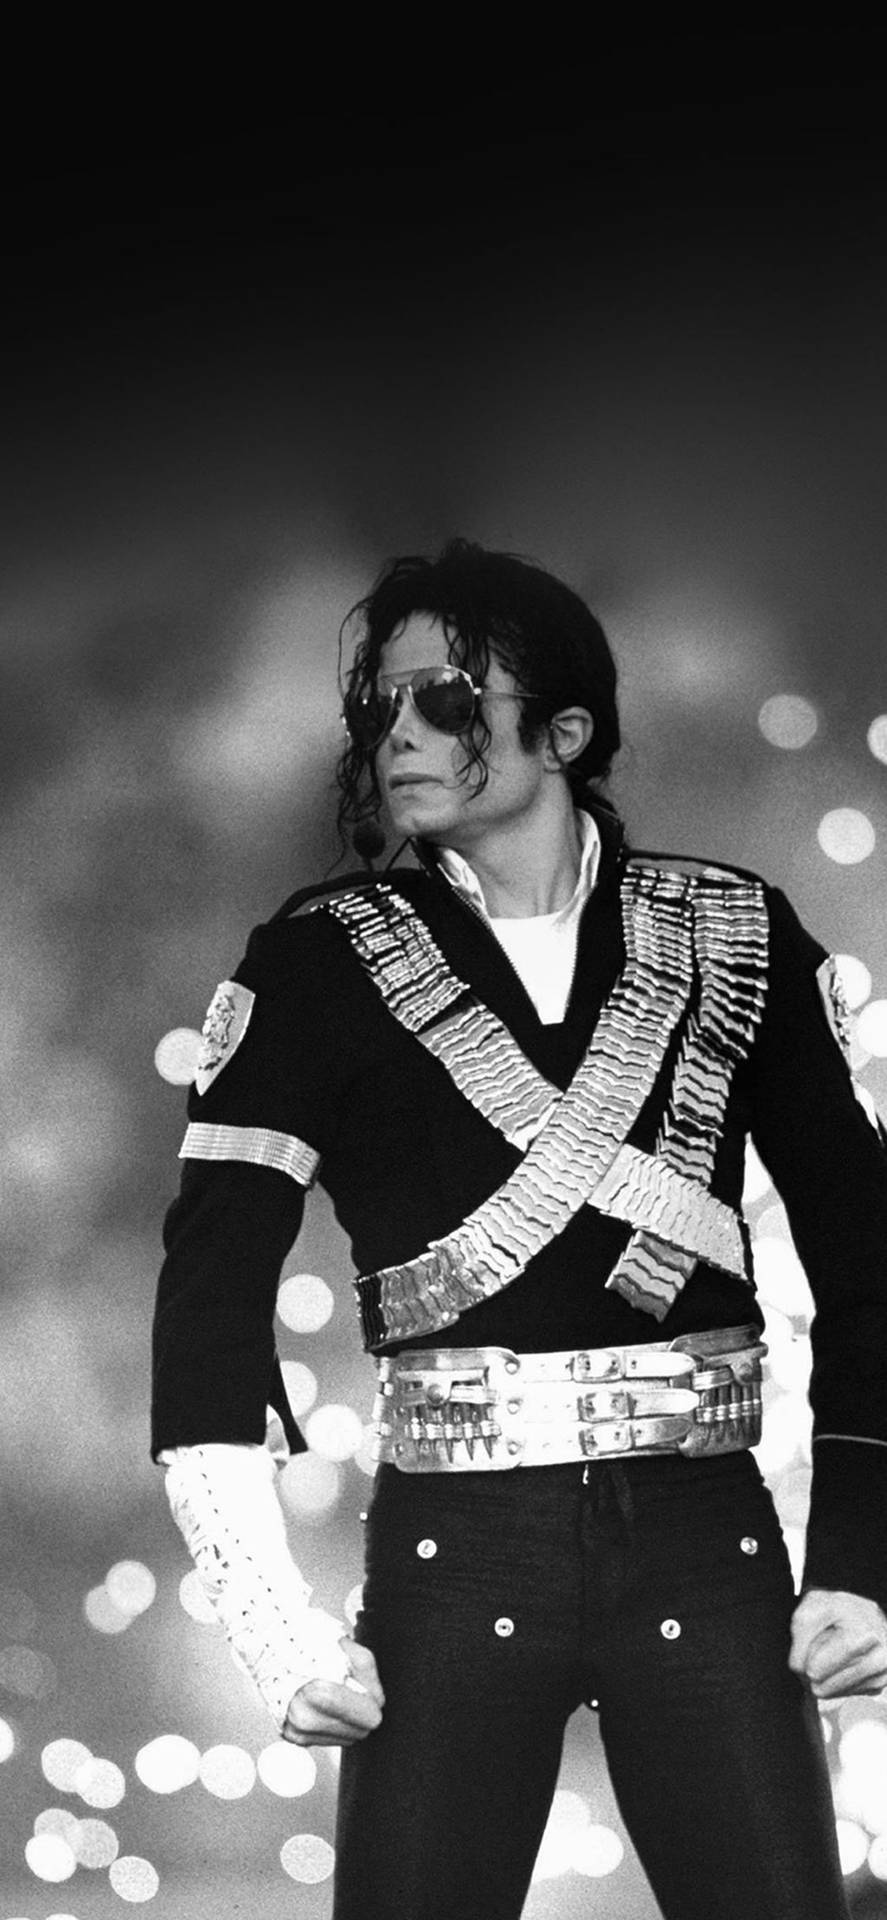 Michael Jackson At Super Bowl Wallpaper